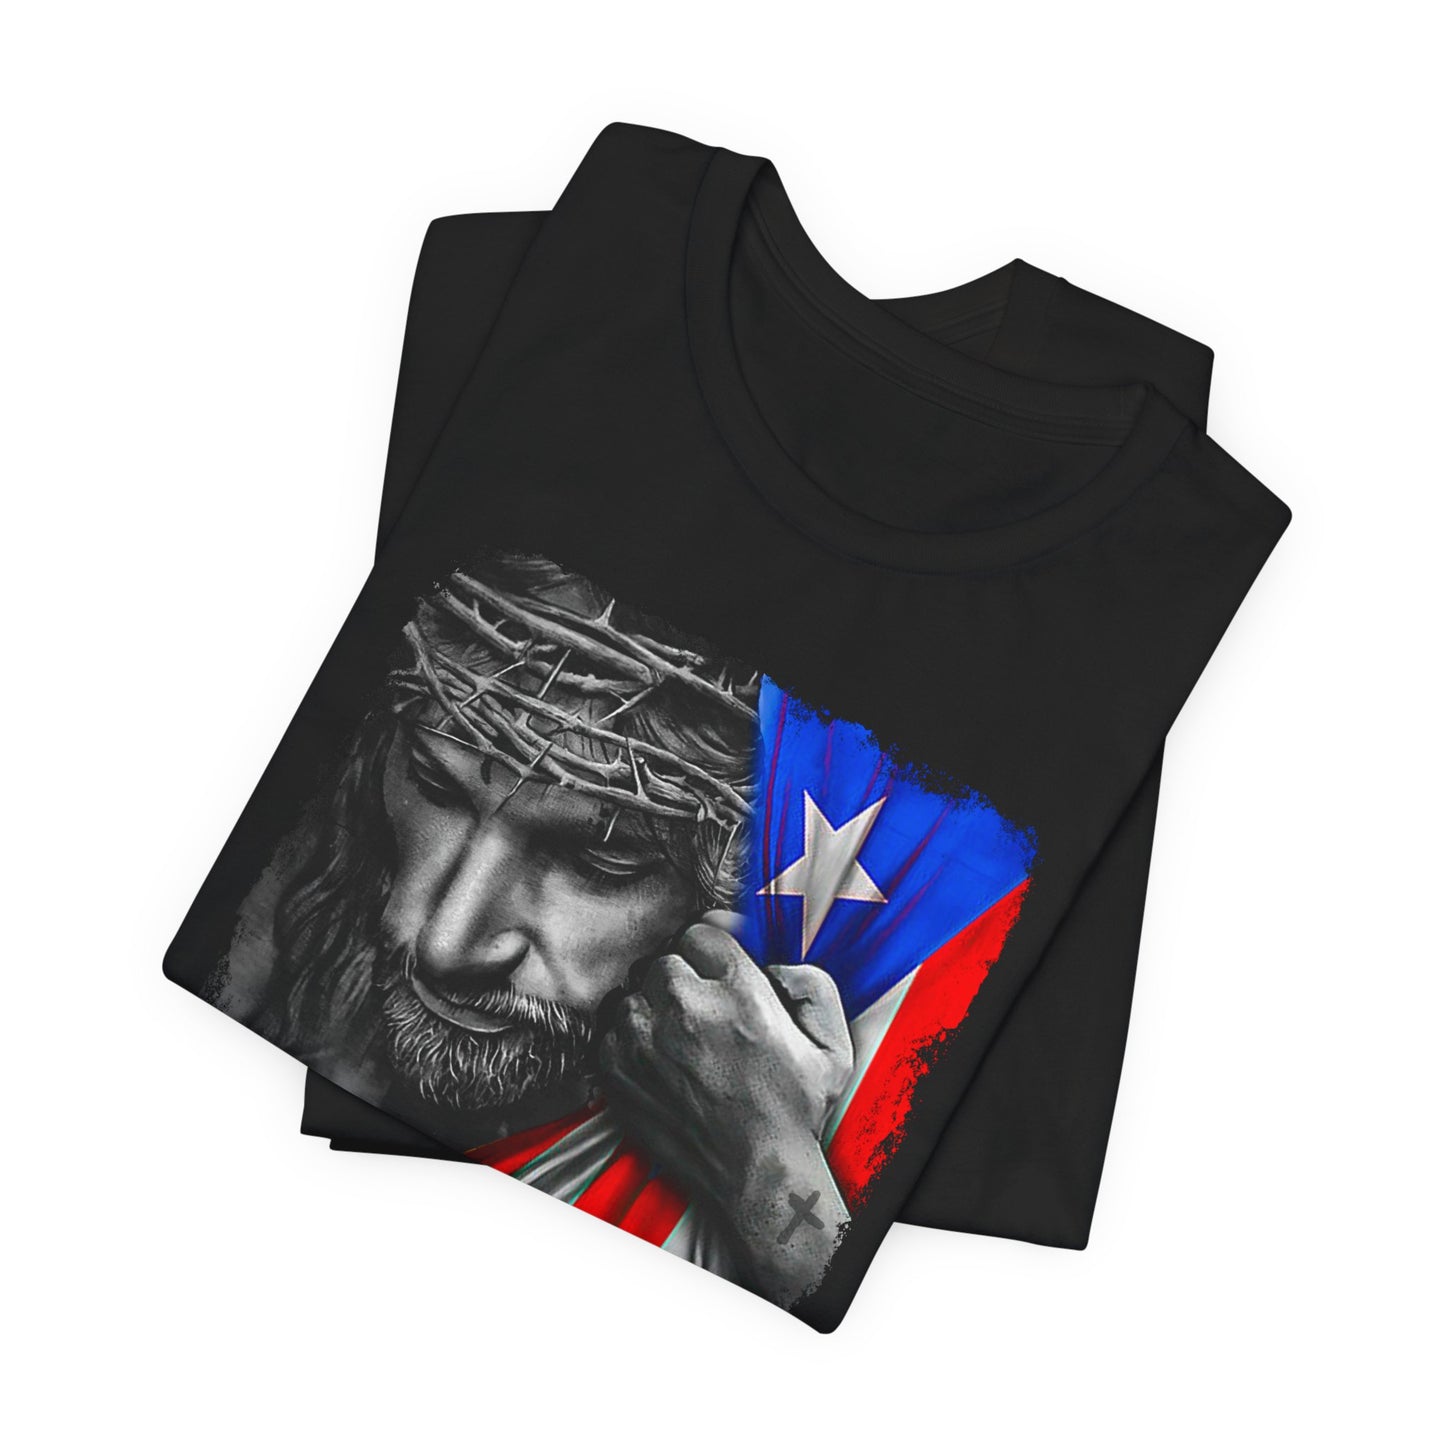 JESUS LOVE PR Unisex Puerto Rico Shirt 4everBoricua™️